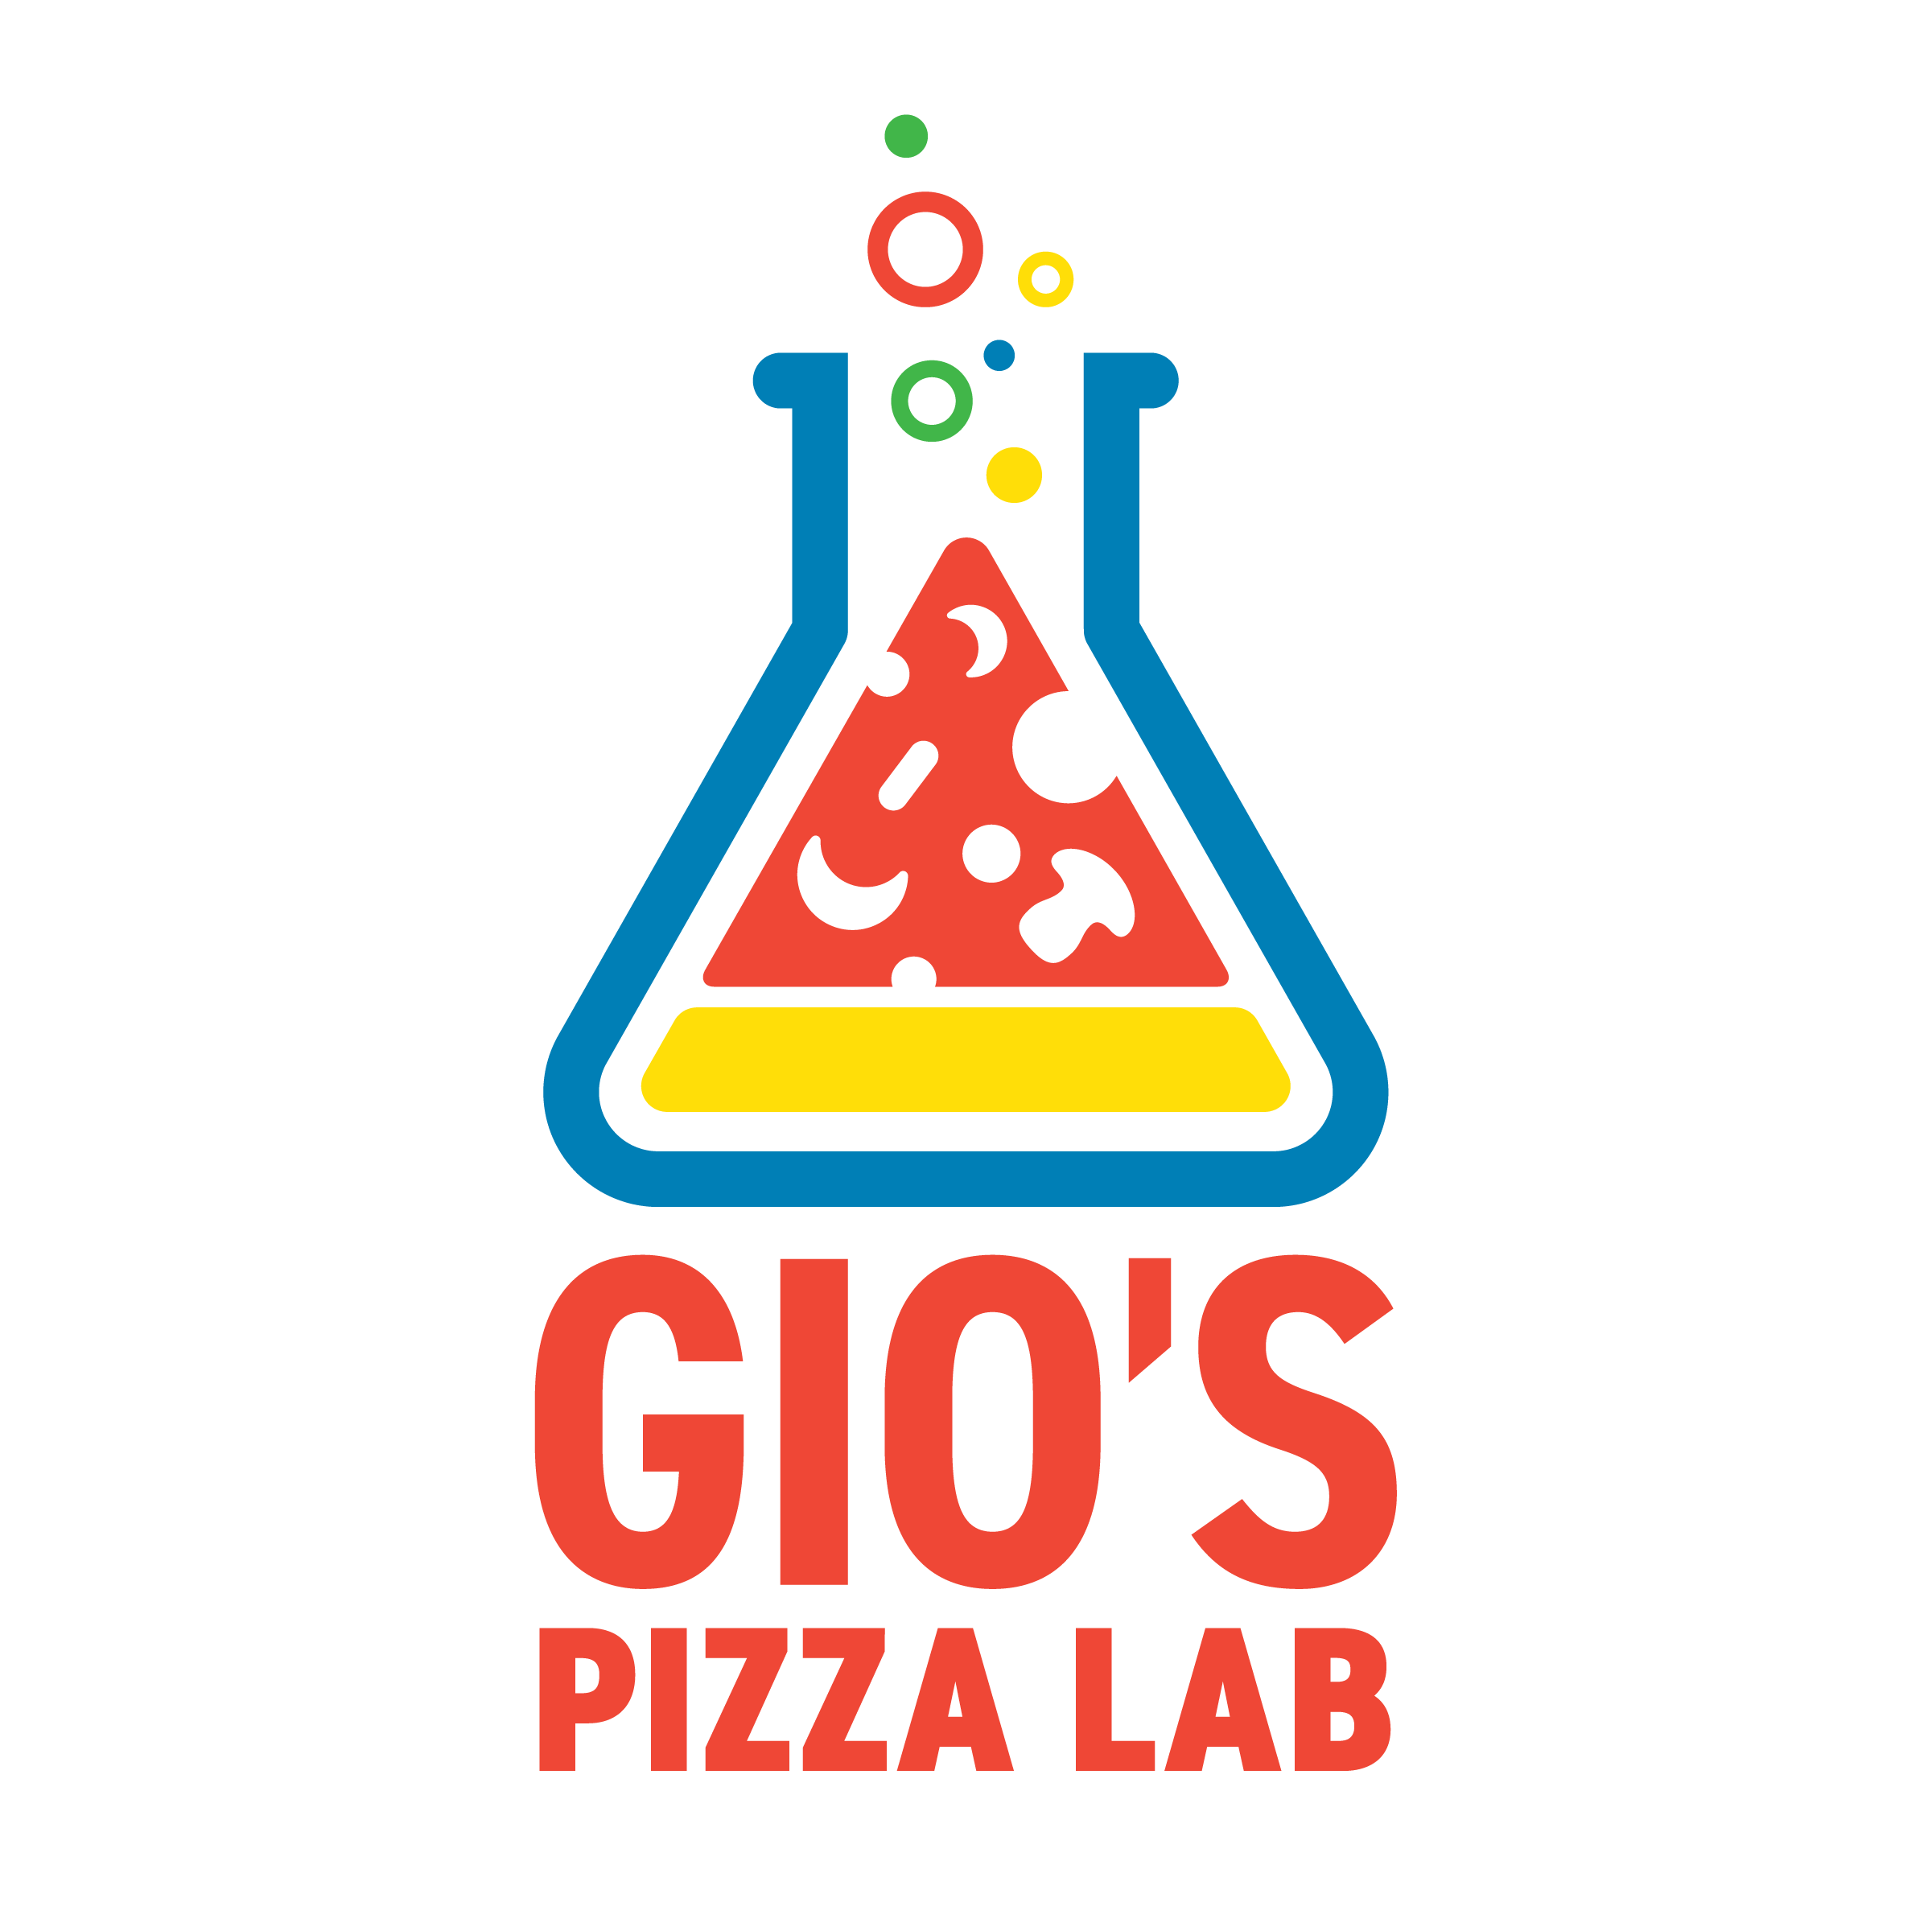 Gio's Pizza Lab | (216) 851-8275 | giospizzalab@gmail.com